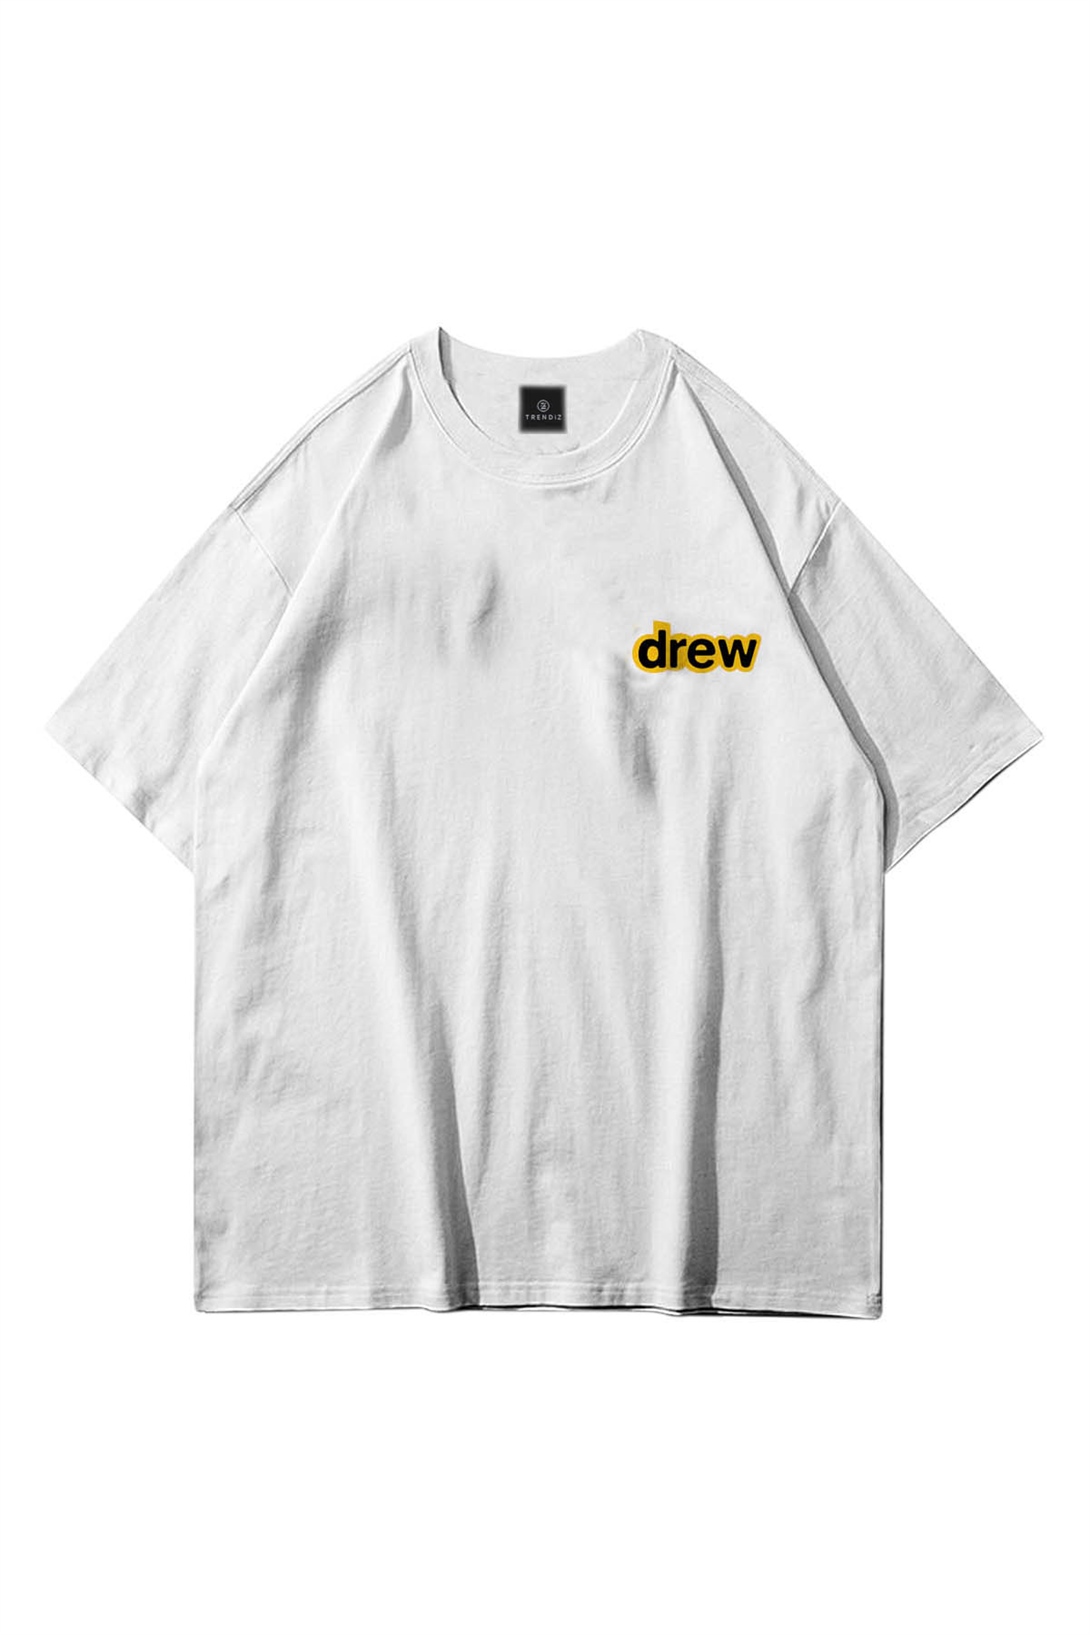 Trendiz Unisex Drew Bear Beyaz Tshirt